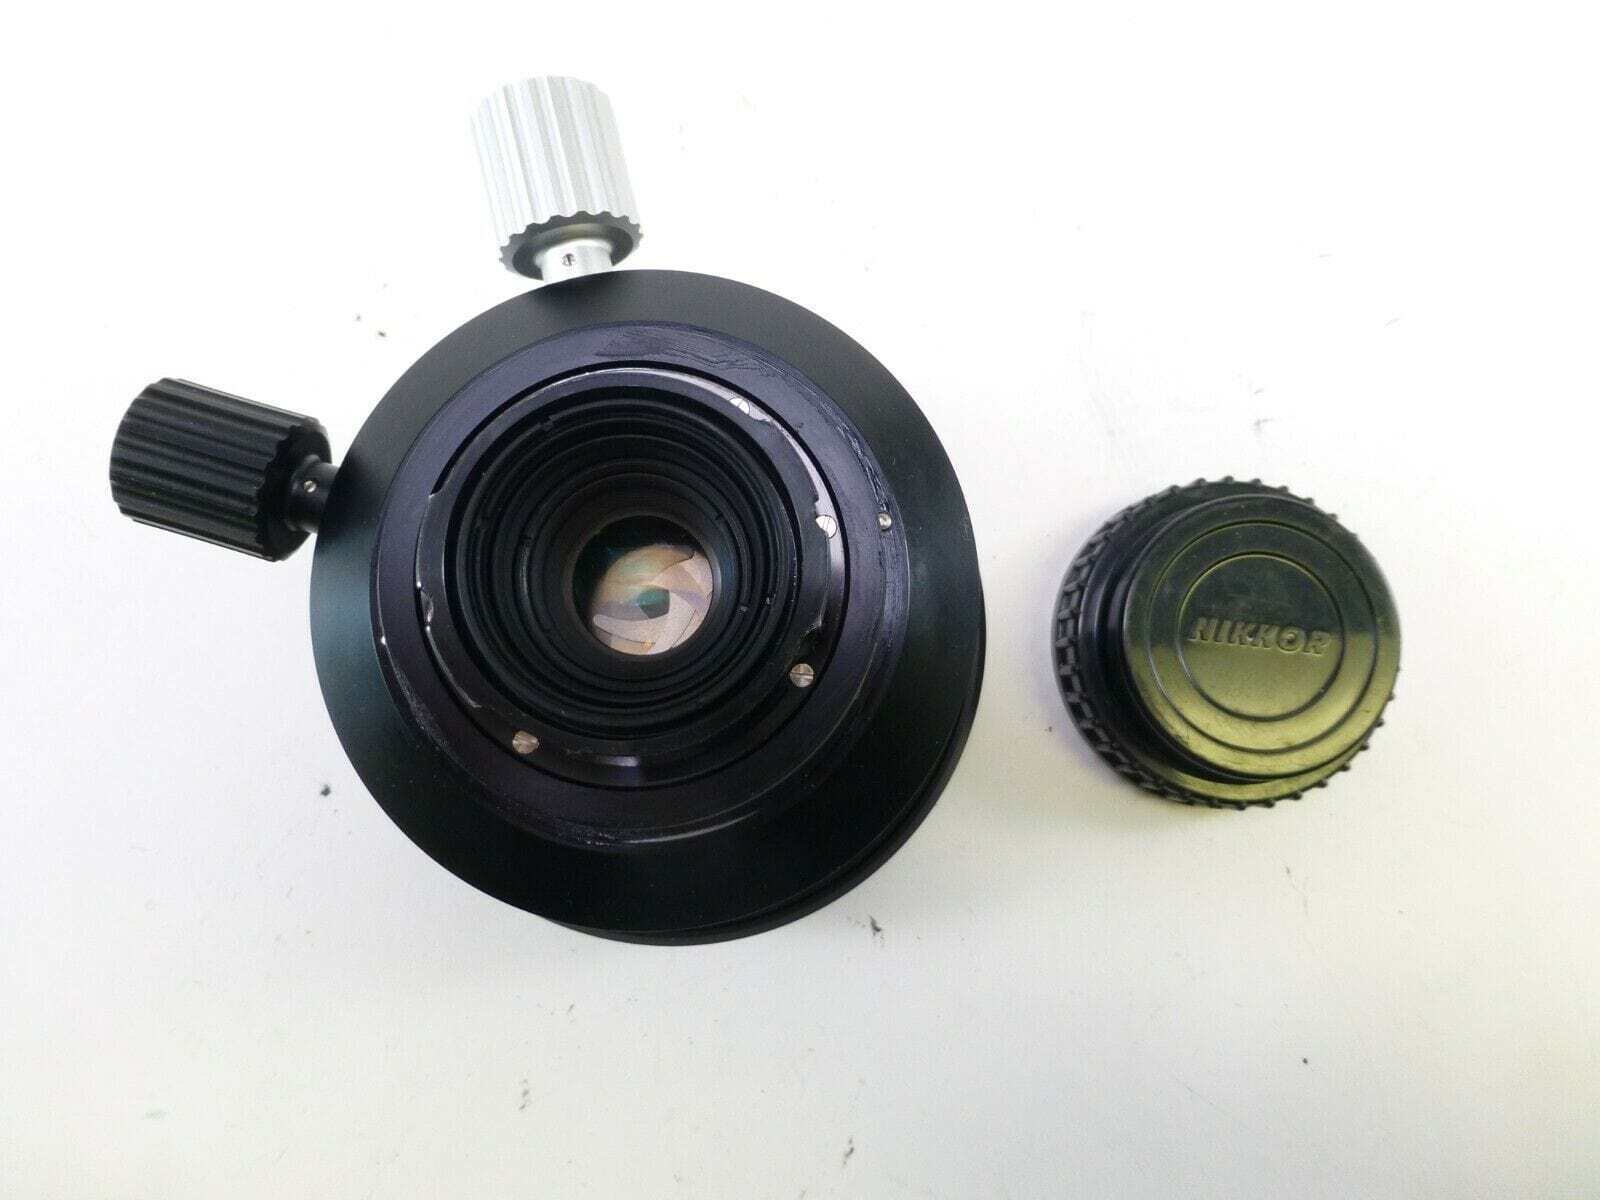 Nikon UW-Nikkor 15mm F/2.8 Lens with Nikonos 15 Viewfinder | eBay